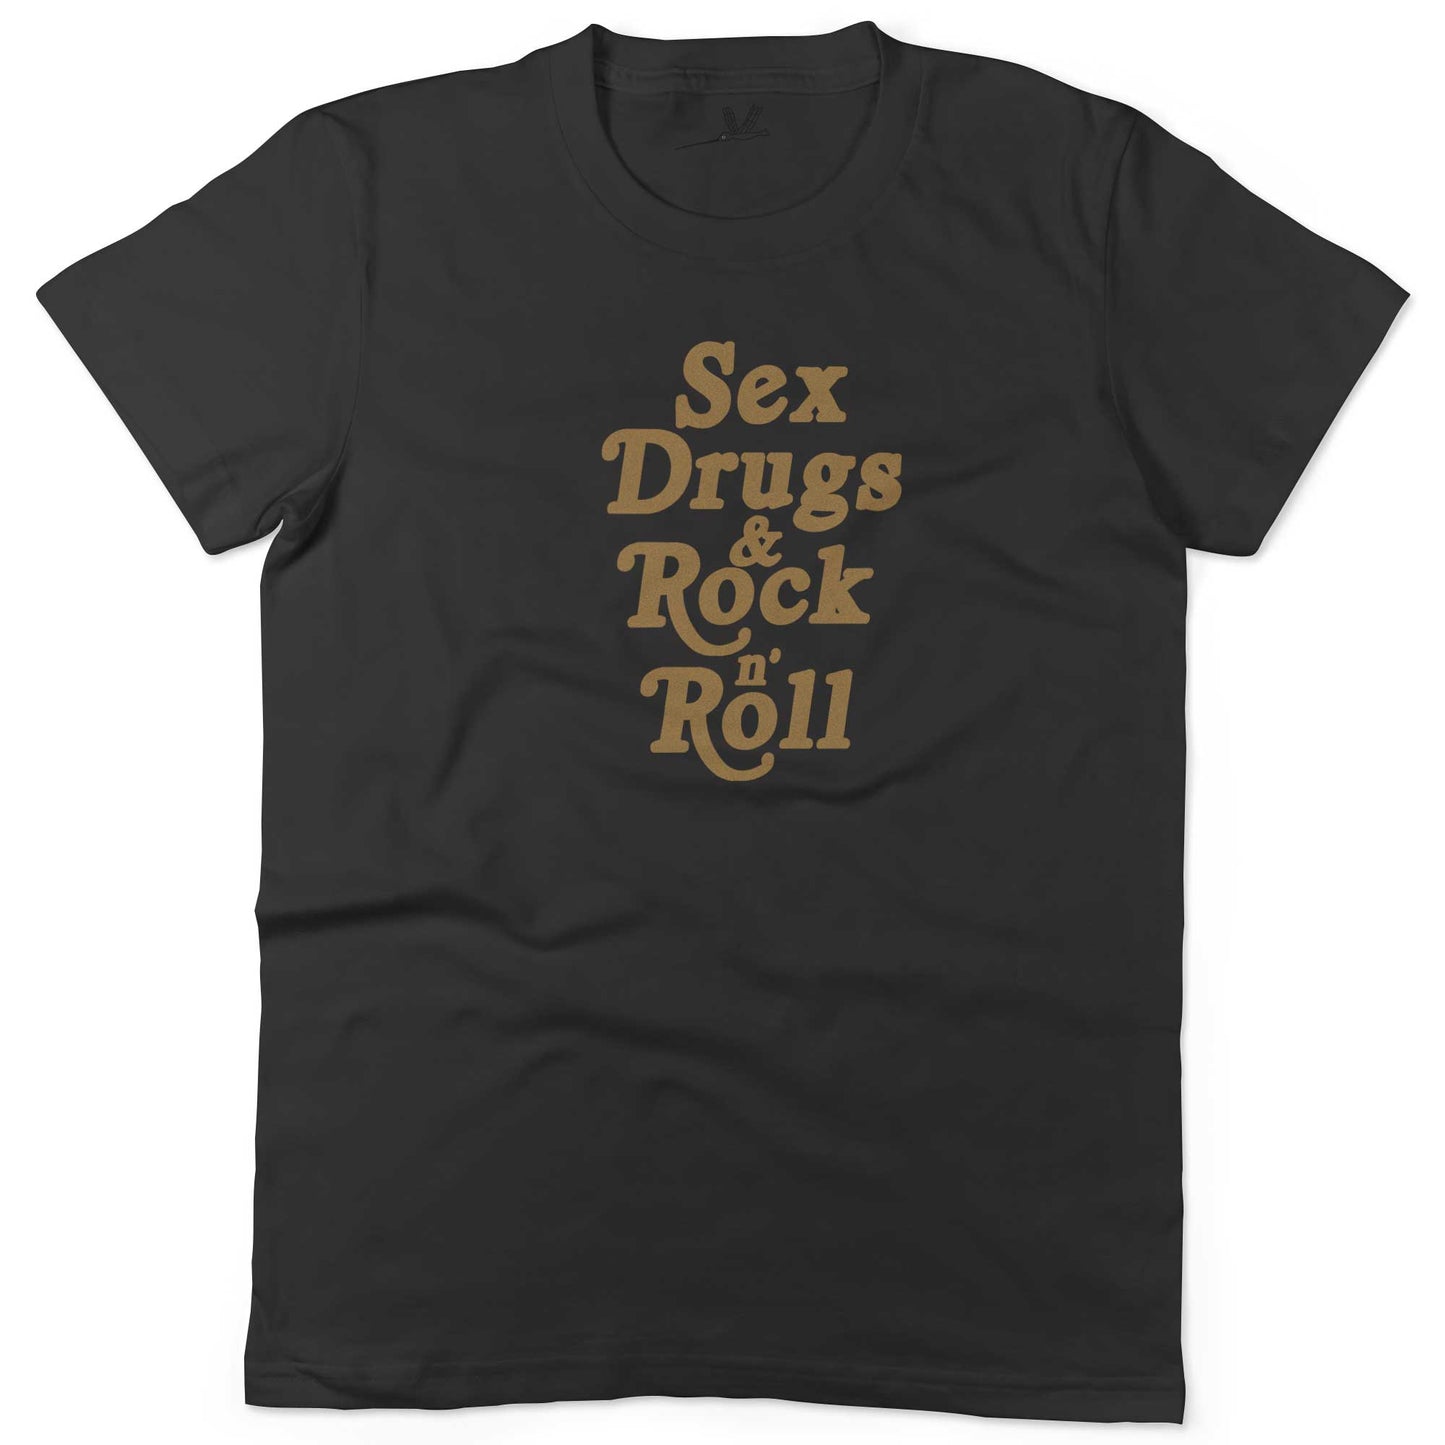 Sex, Drugs & Rock 'n Roll Unisex Or Women's Cotton T-shirt-Black-Woman